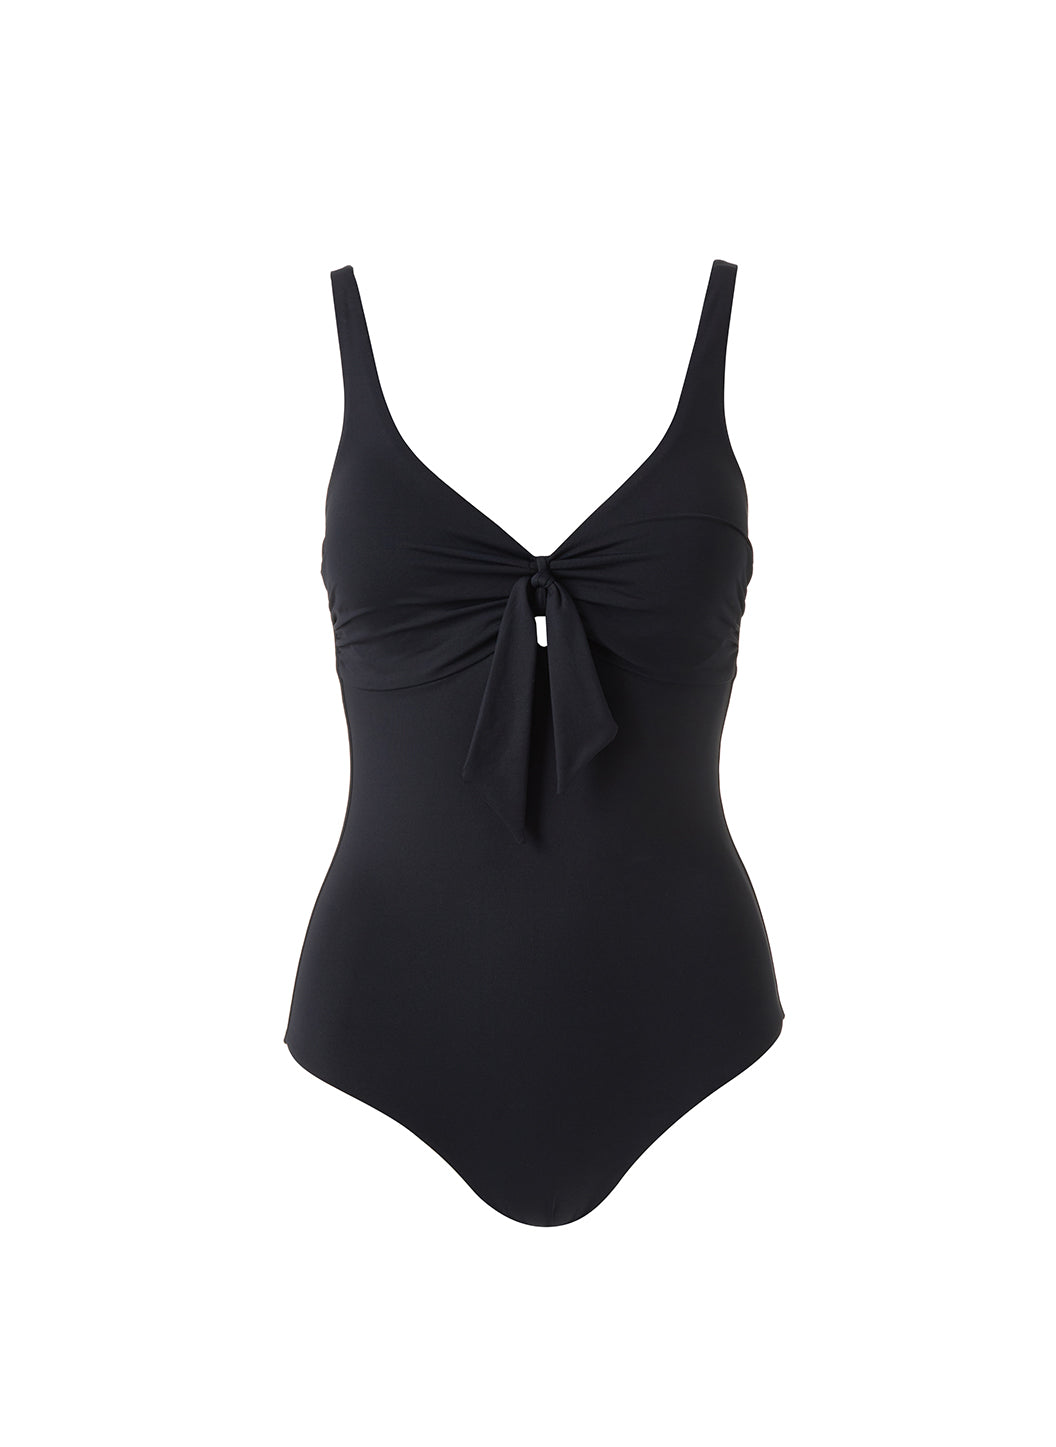 St Lucia Black Rectangle Trim Over The Shoulder Swimsuit